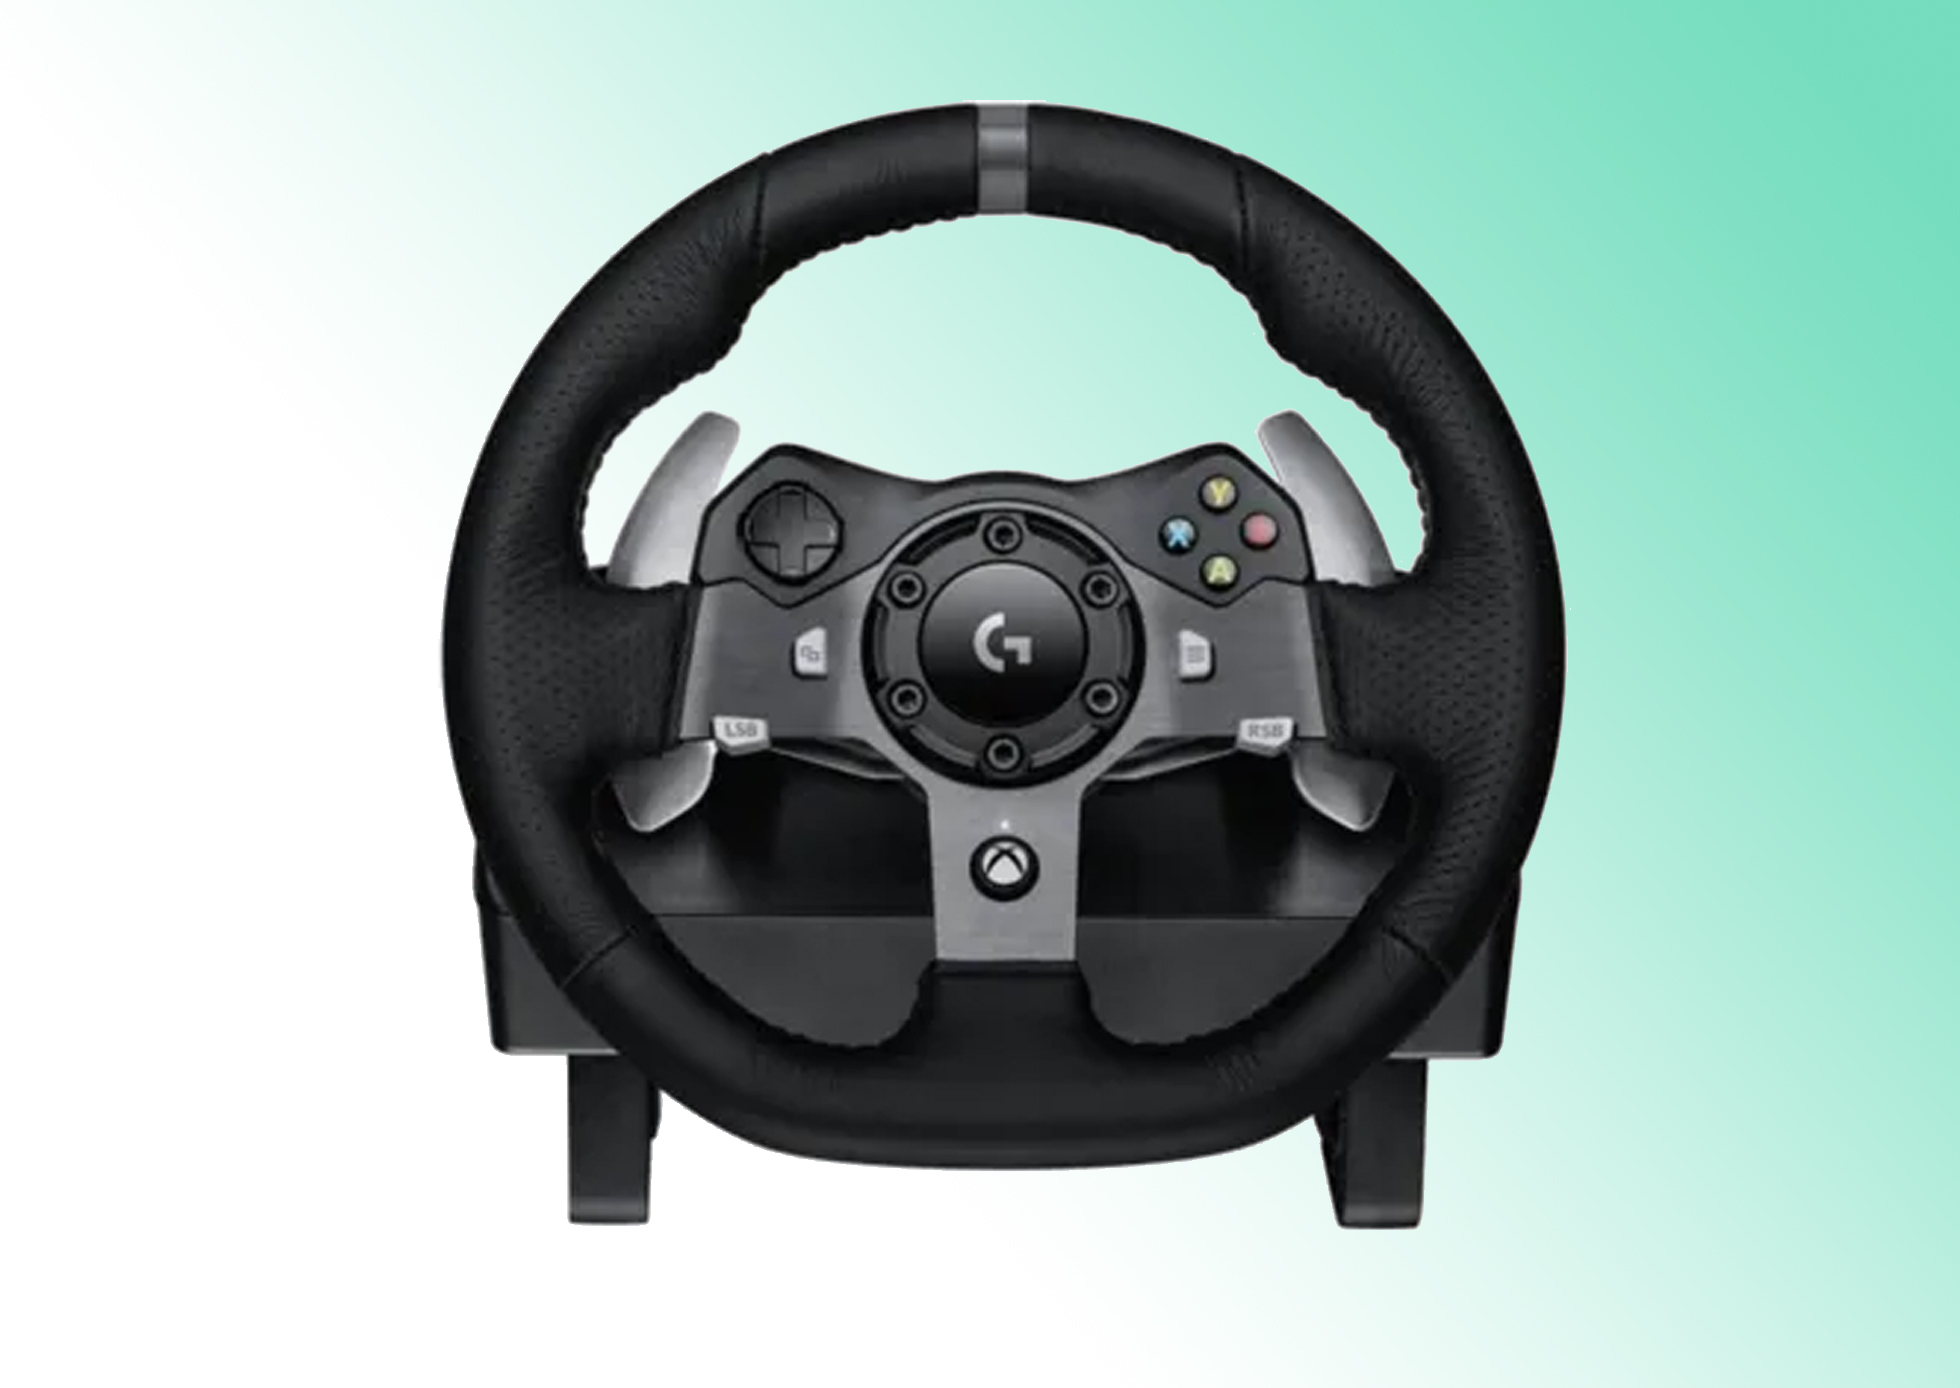 Logitech G920 steering wheel review